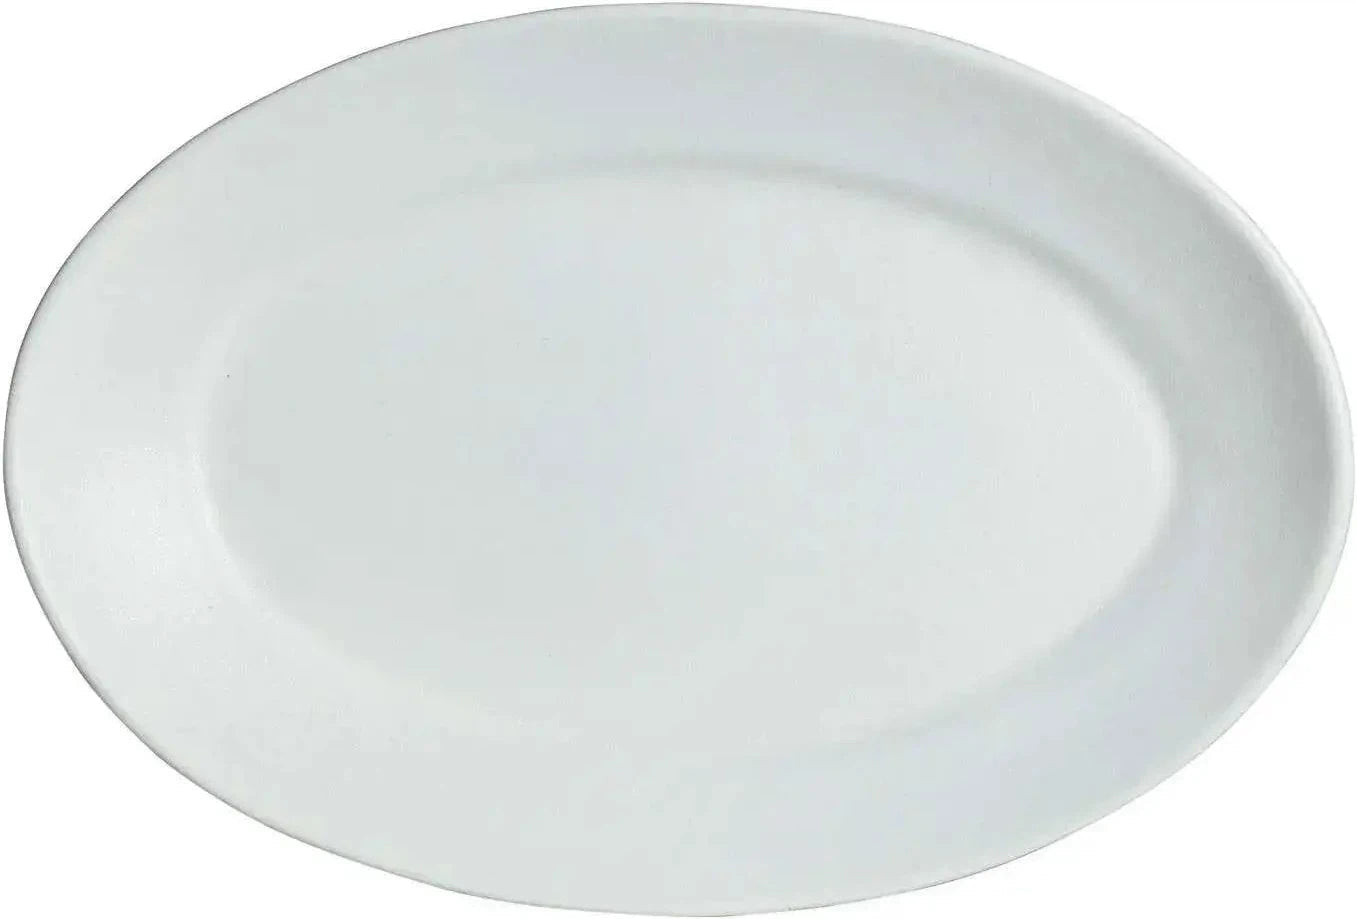 Bugambilia - Mod 169.6 Oz Large White Oval Platter With Glossy Smooth Finish - PO004-MOD-WW